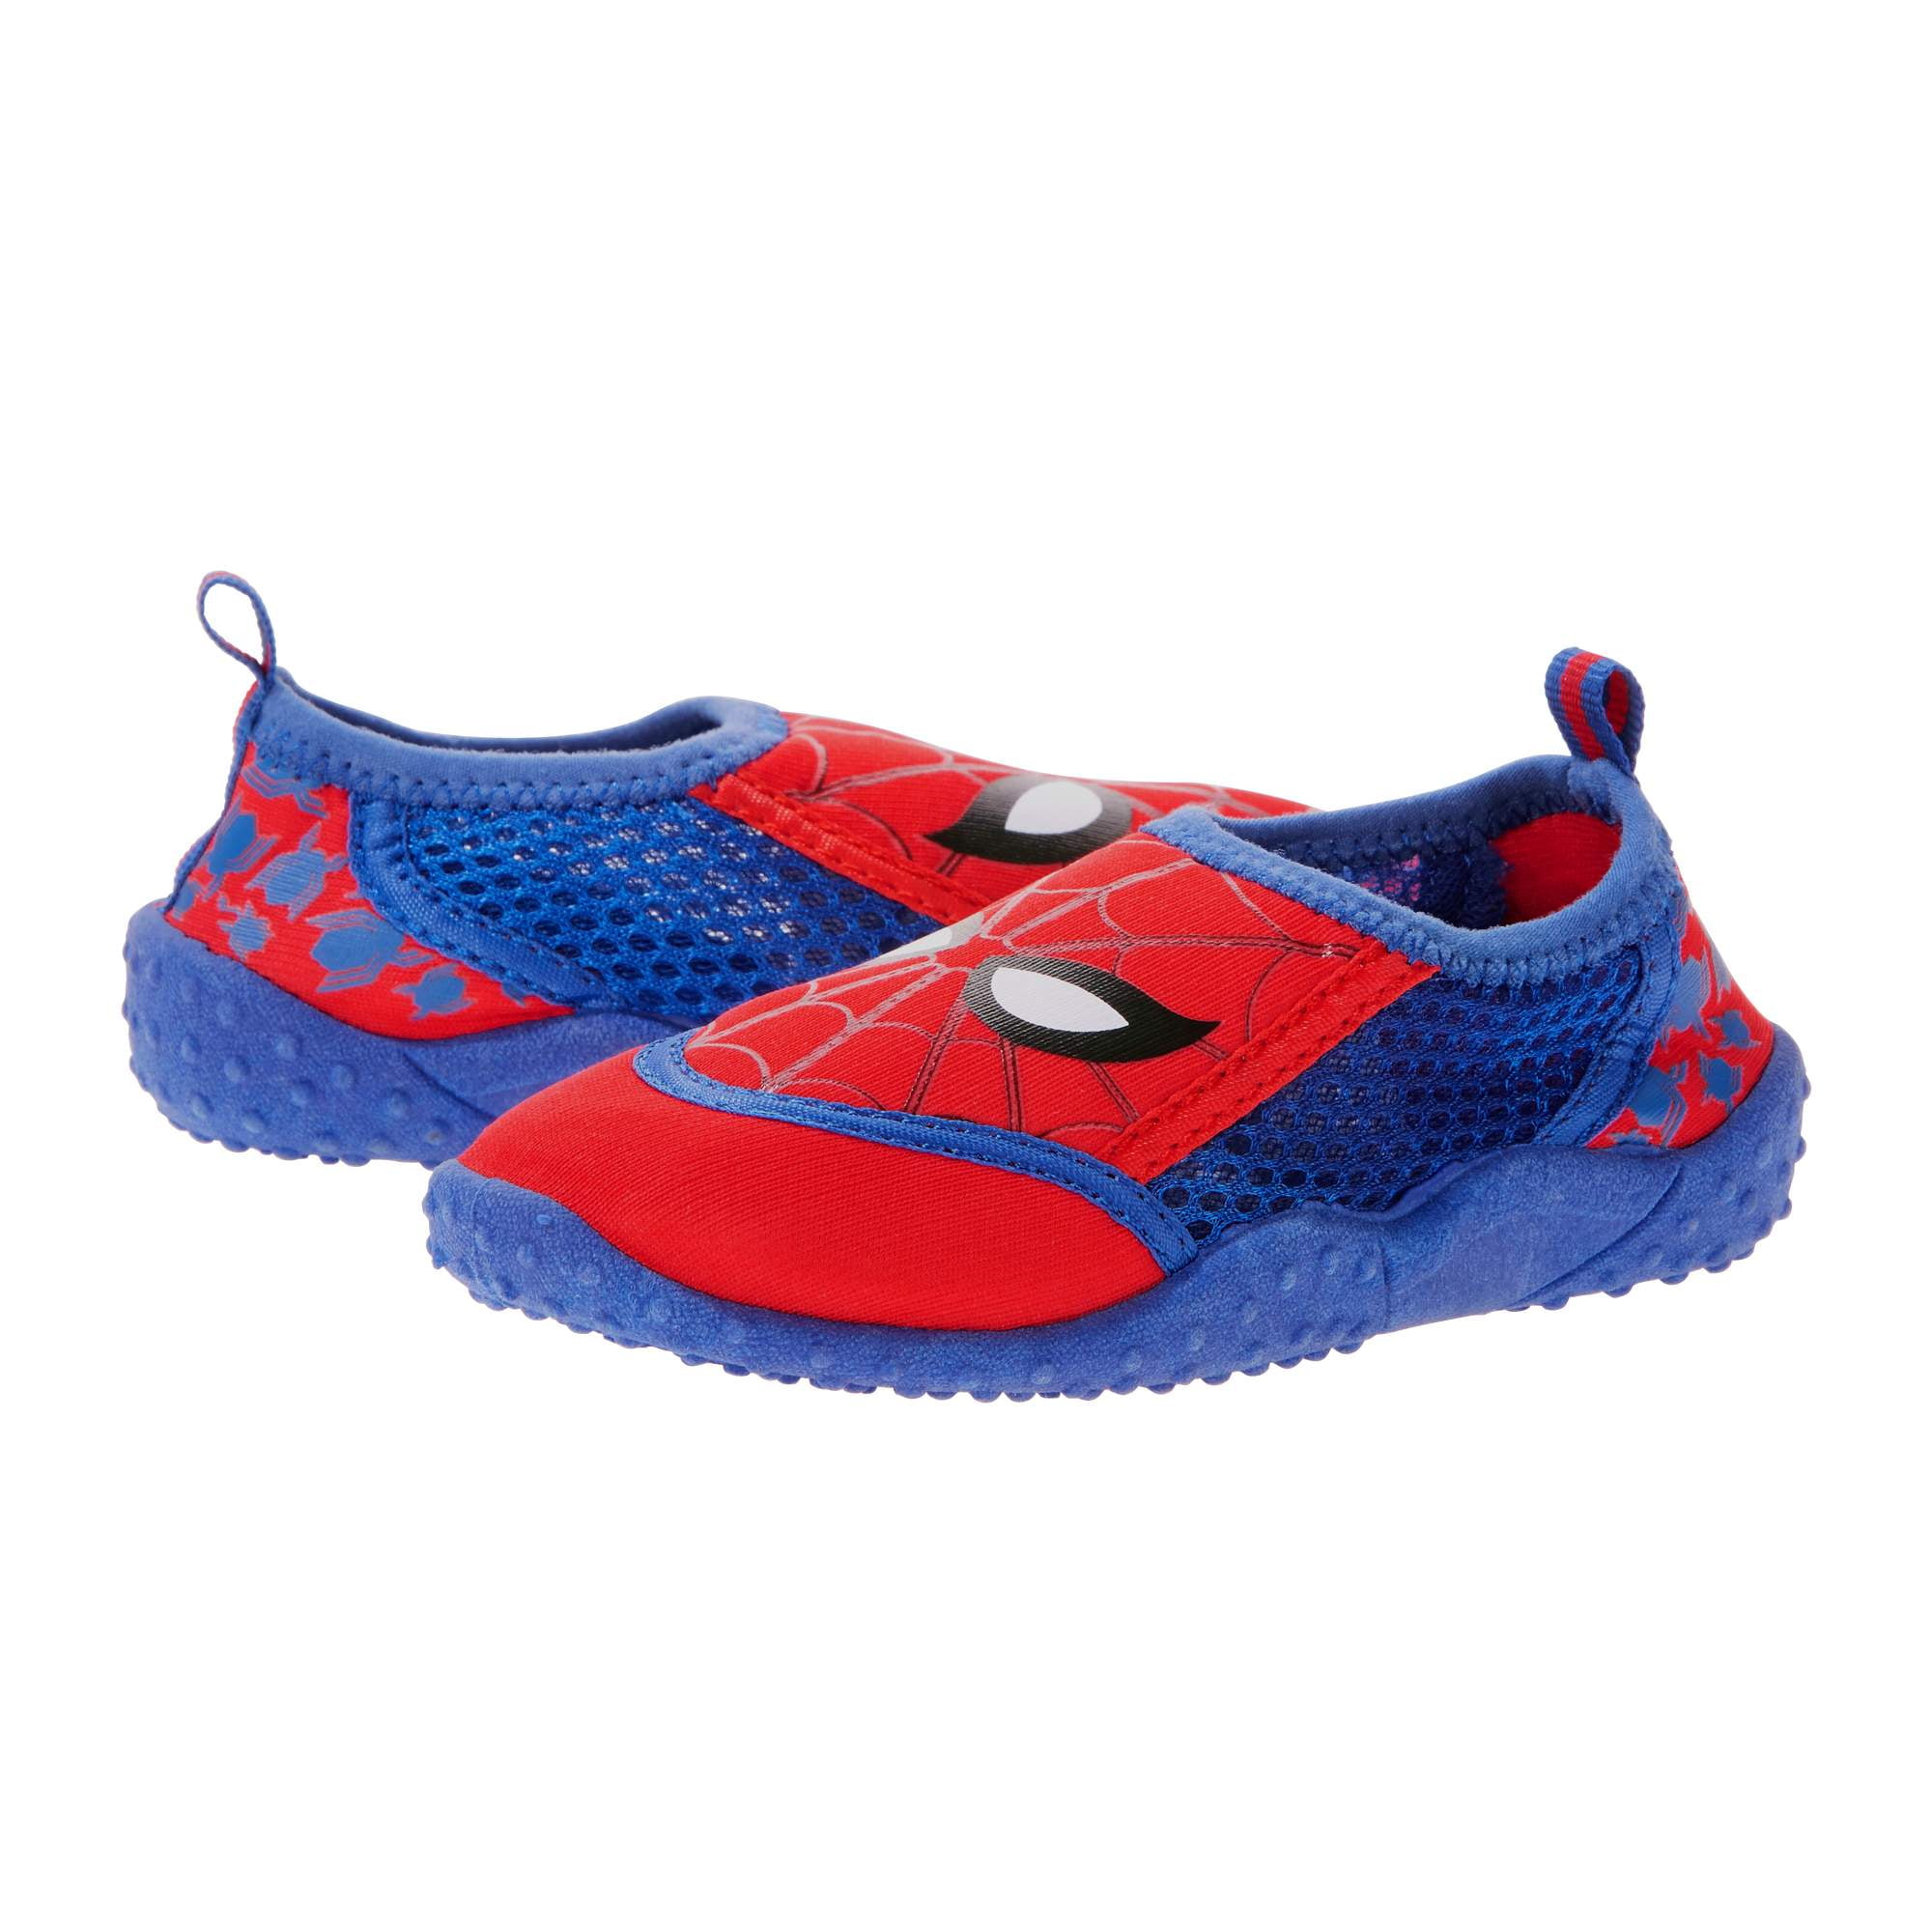 Homejuan Kids Spiderman Sandals Summer Trekking Hiking Casual Sneakers Beach Pool Sports Shoes 